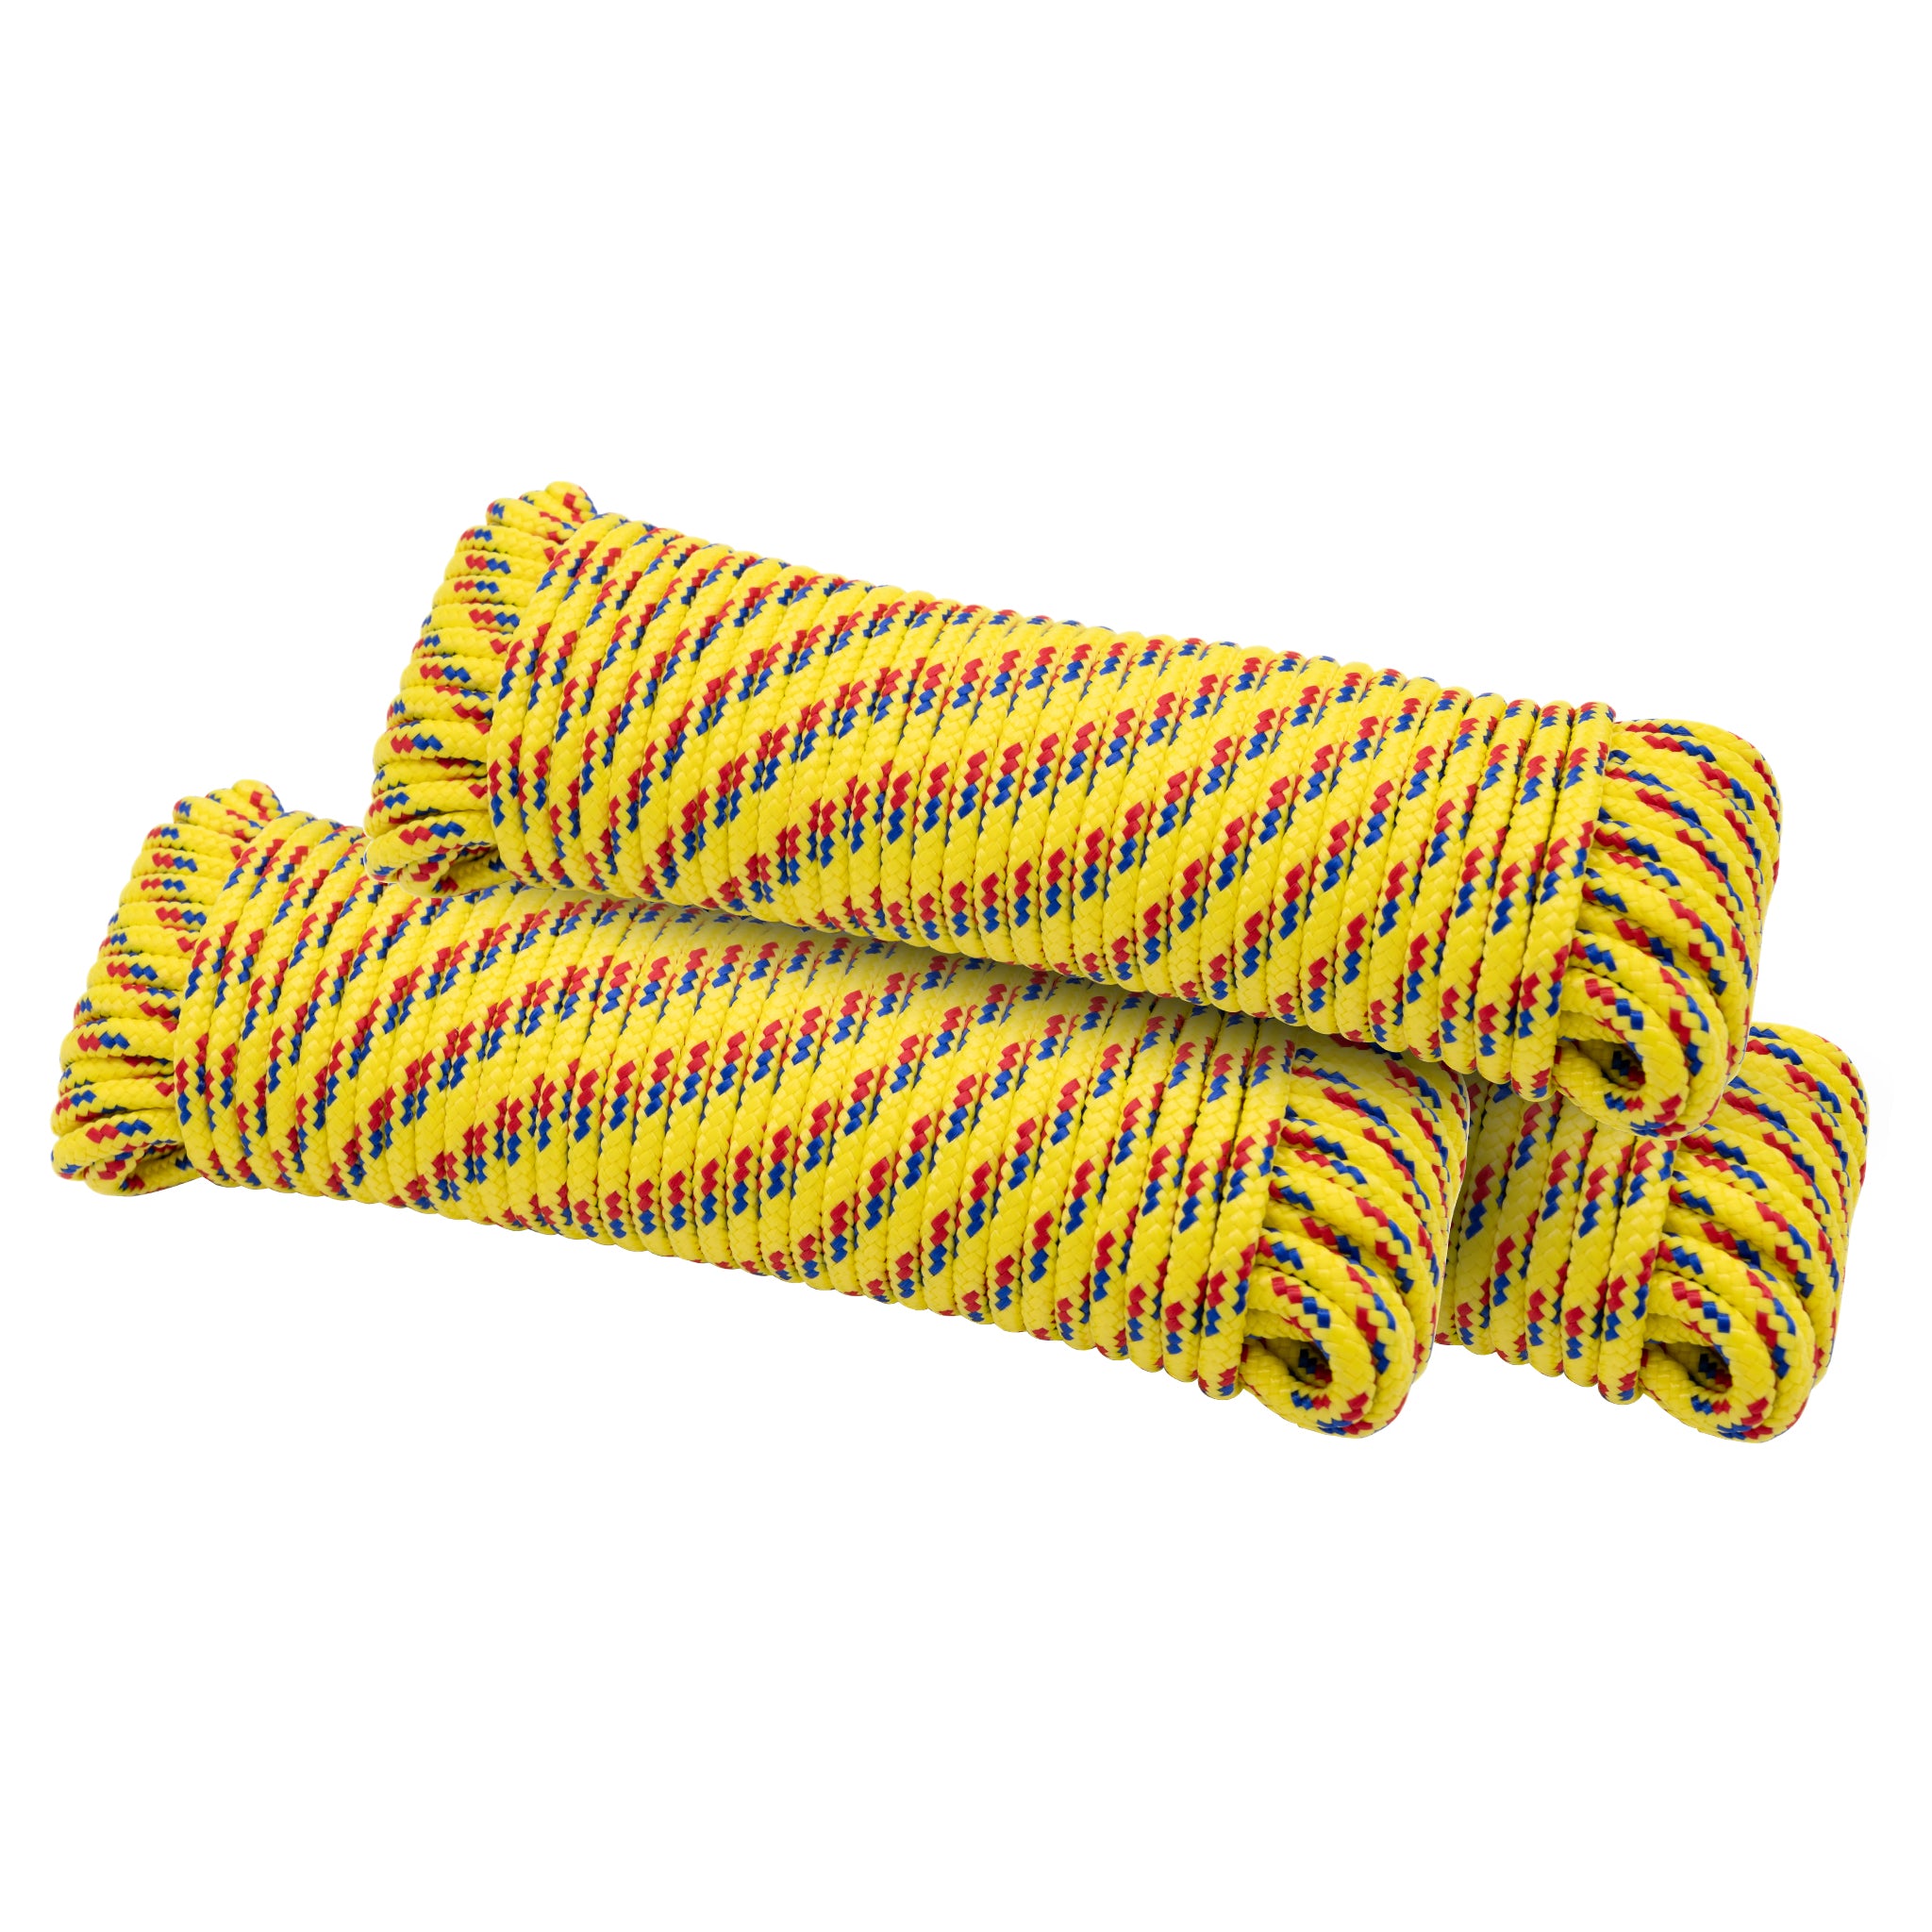 Utility Rope 6mm x 25m Bundle - Yellow